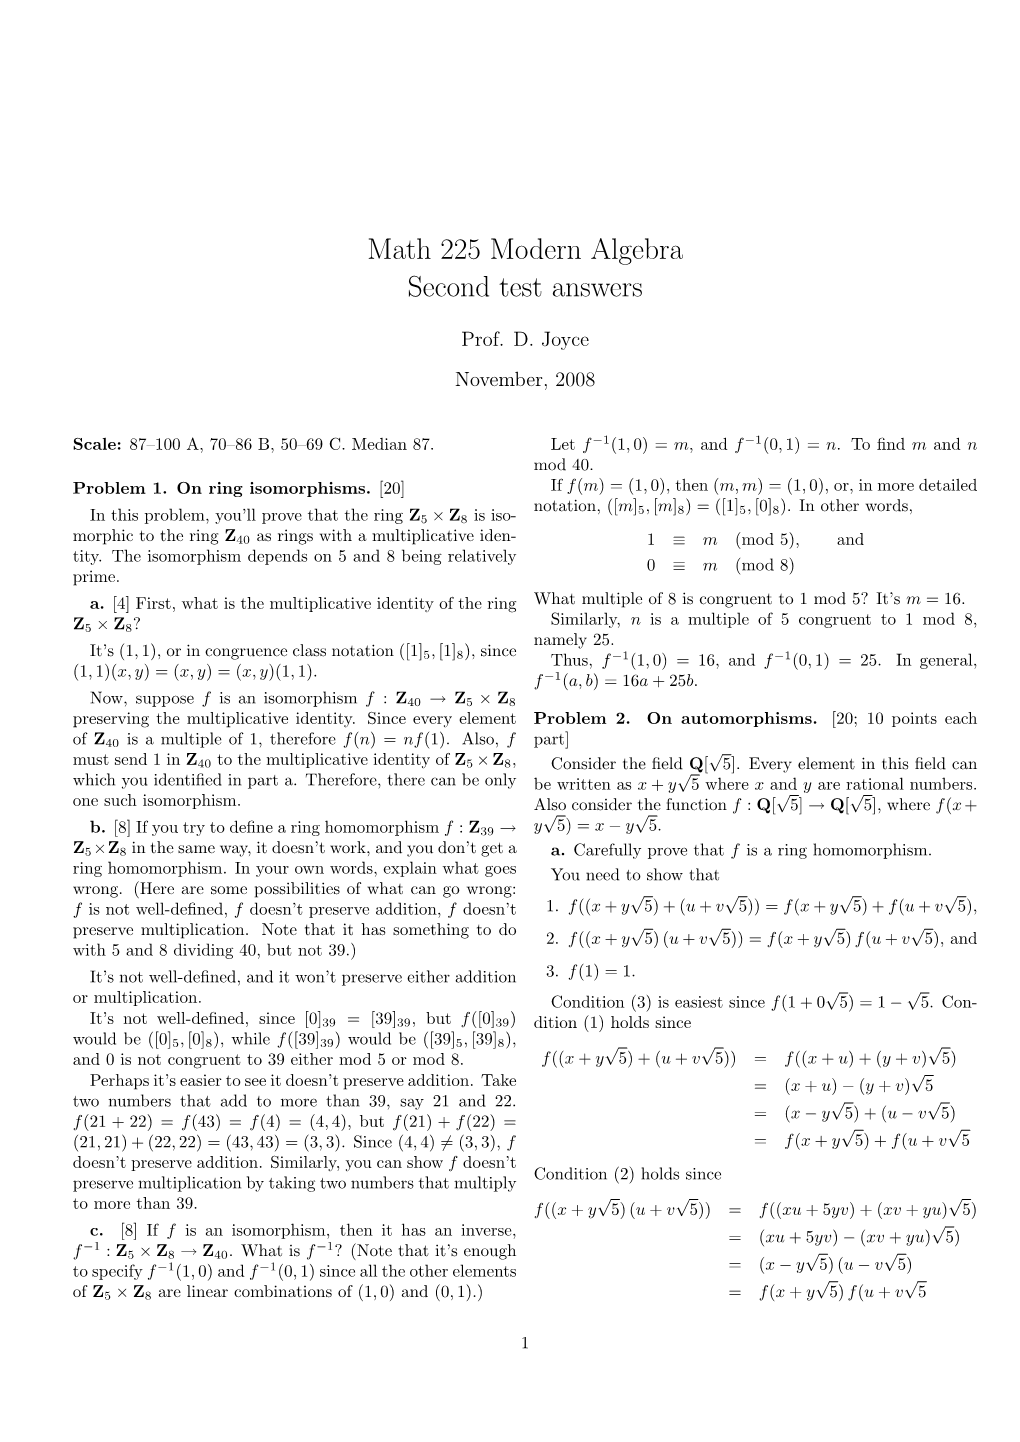 Math 225 Modern Algebra Second Test Answers